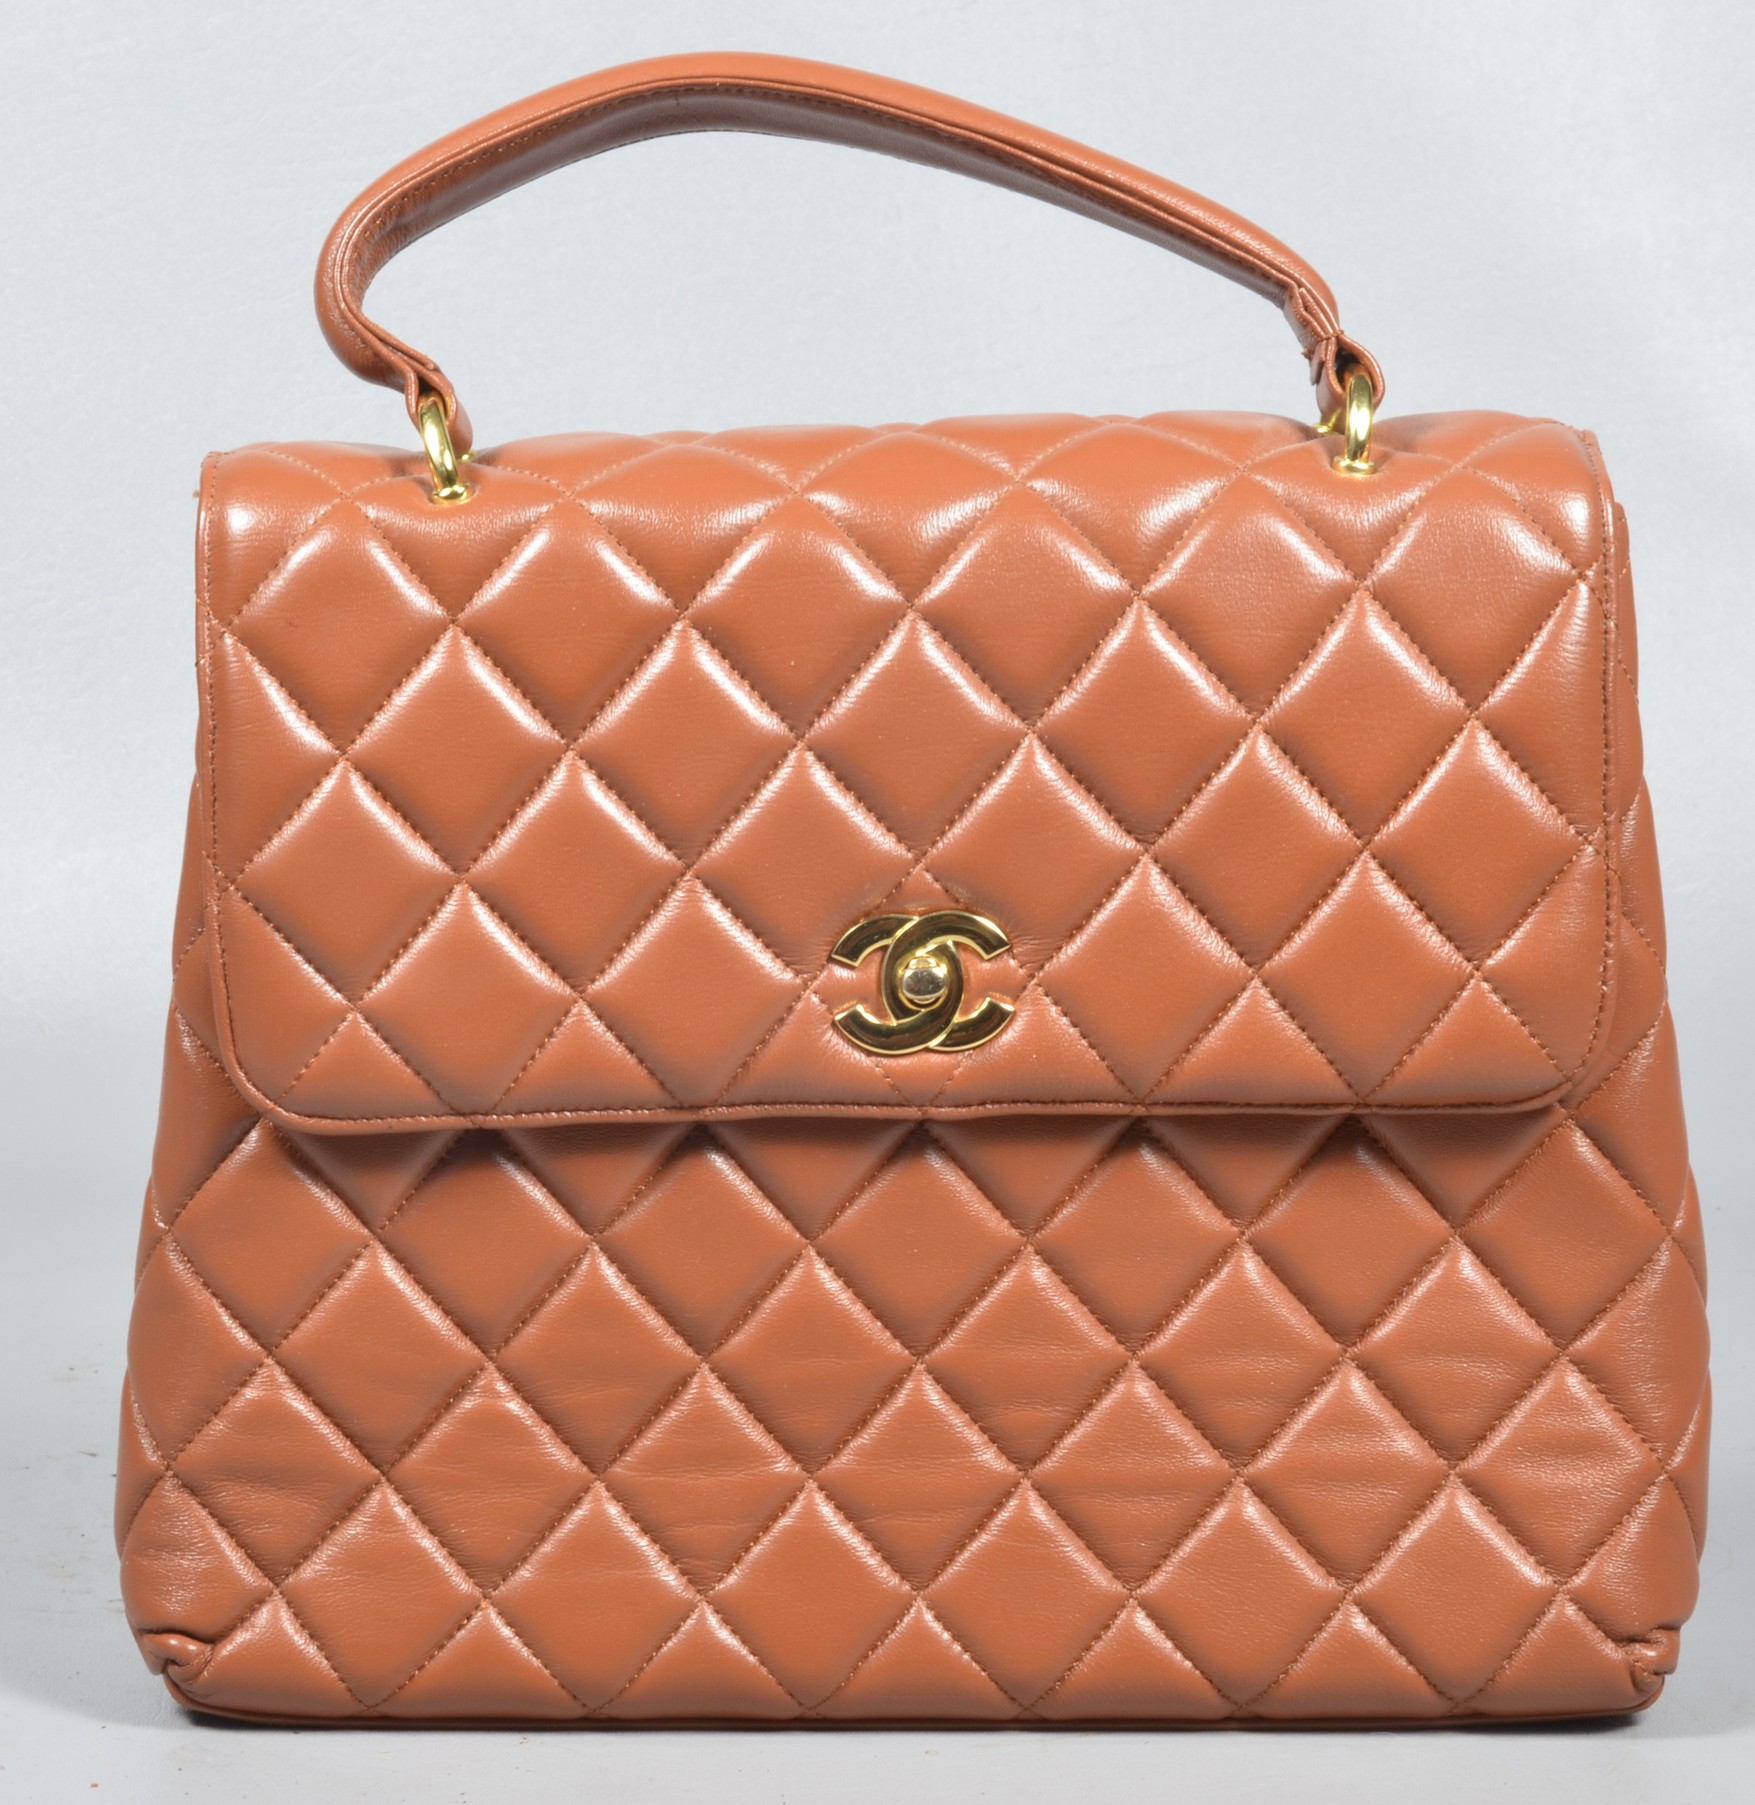 Chanel style Kelly flap purse,